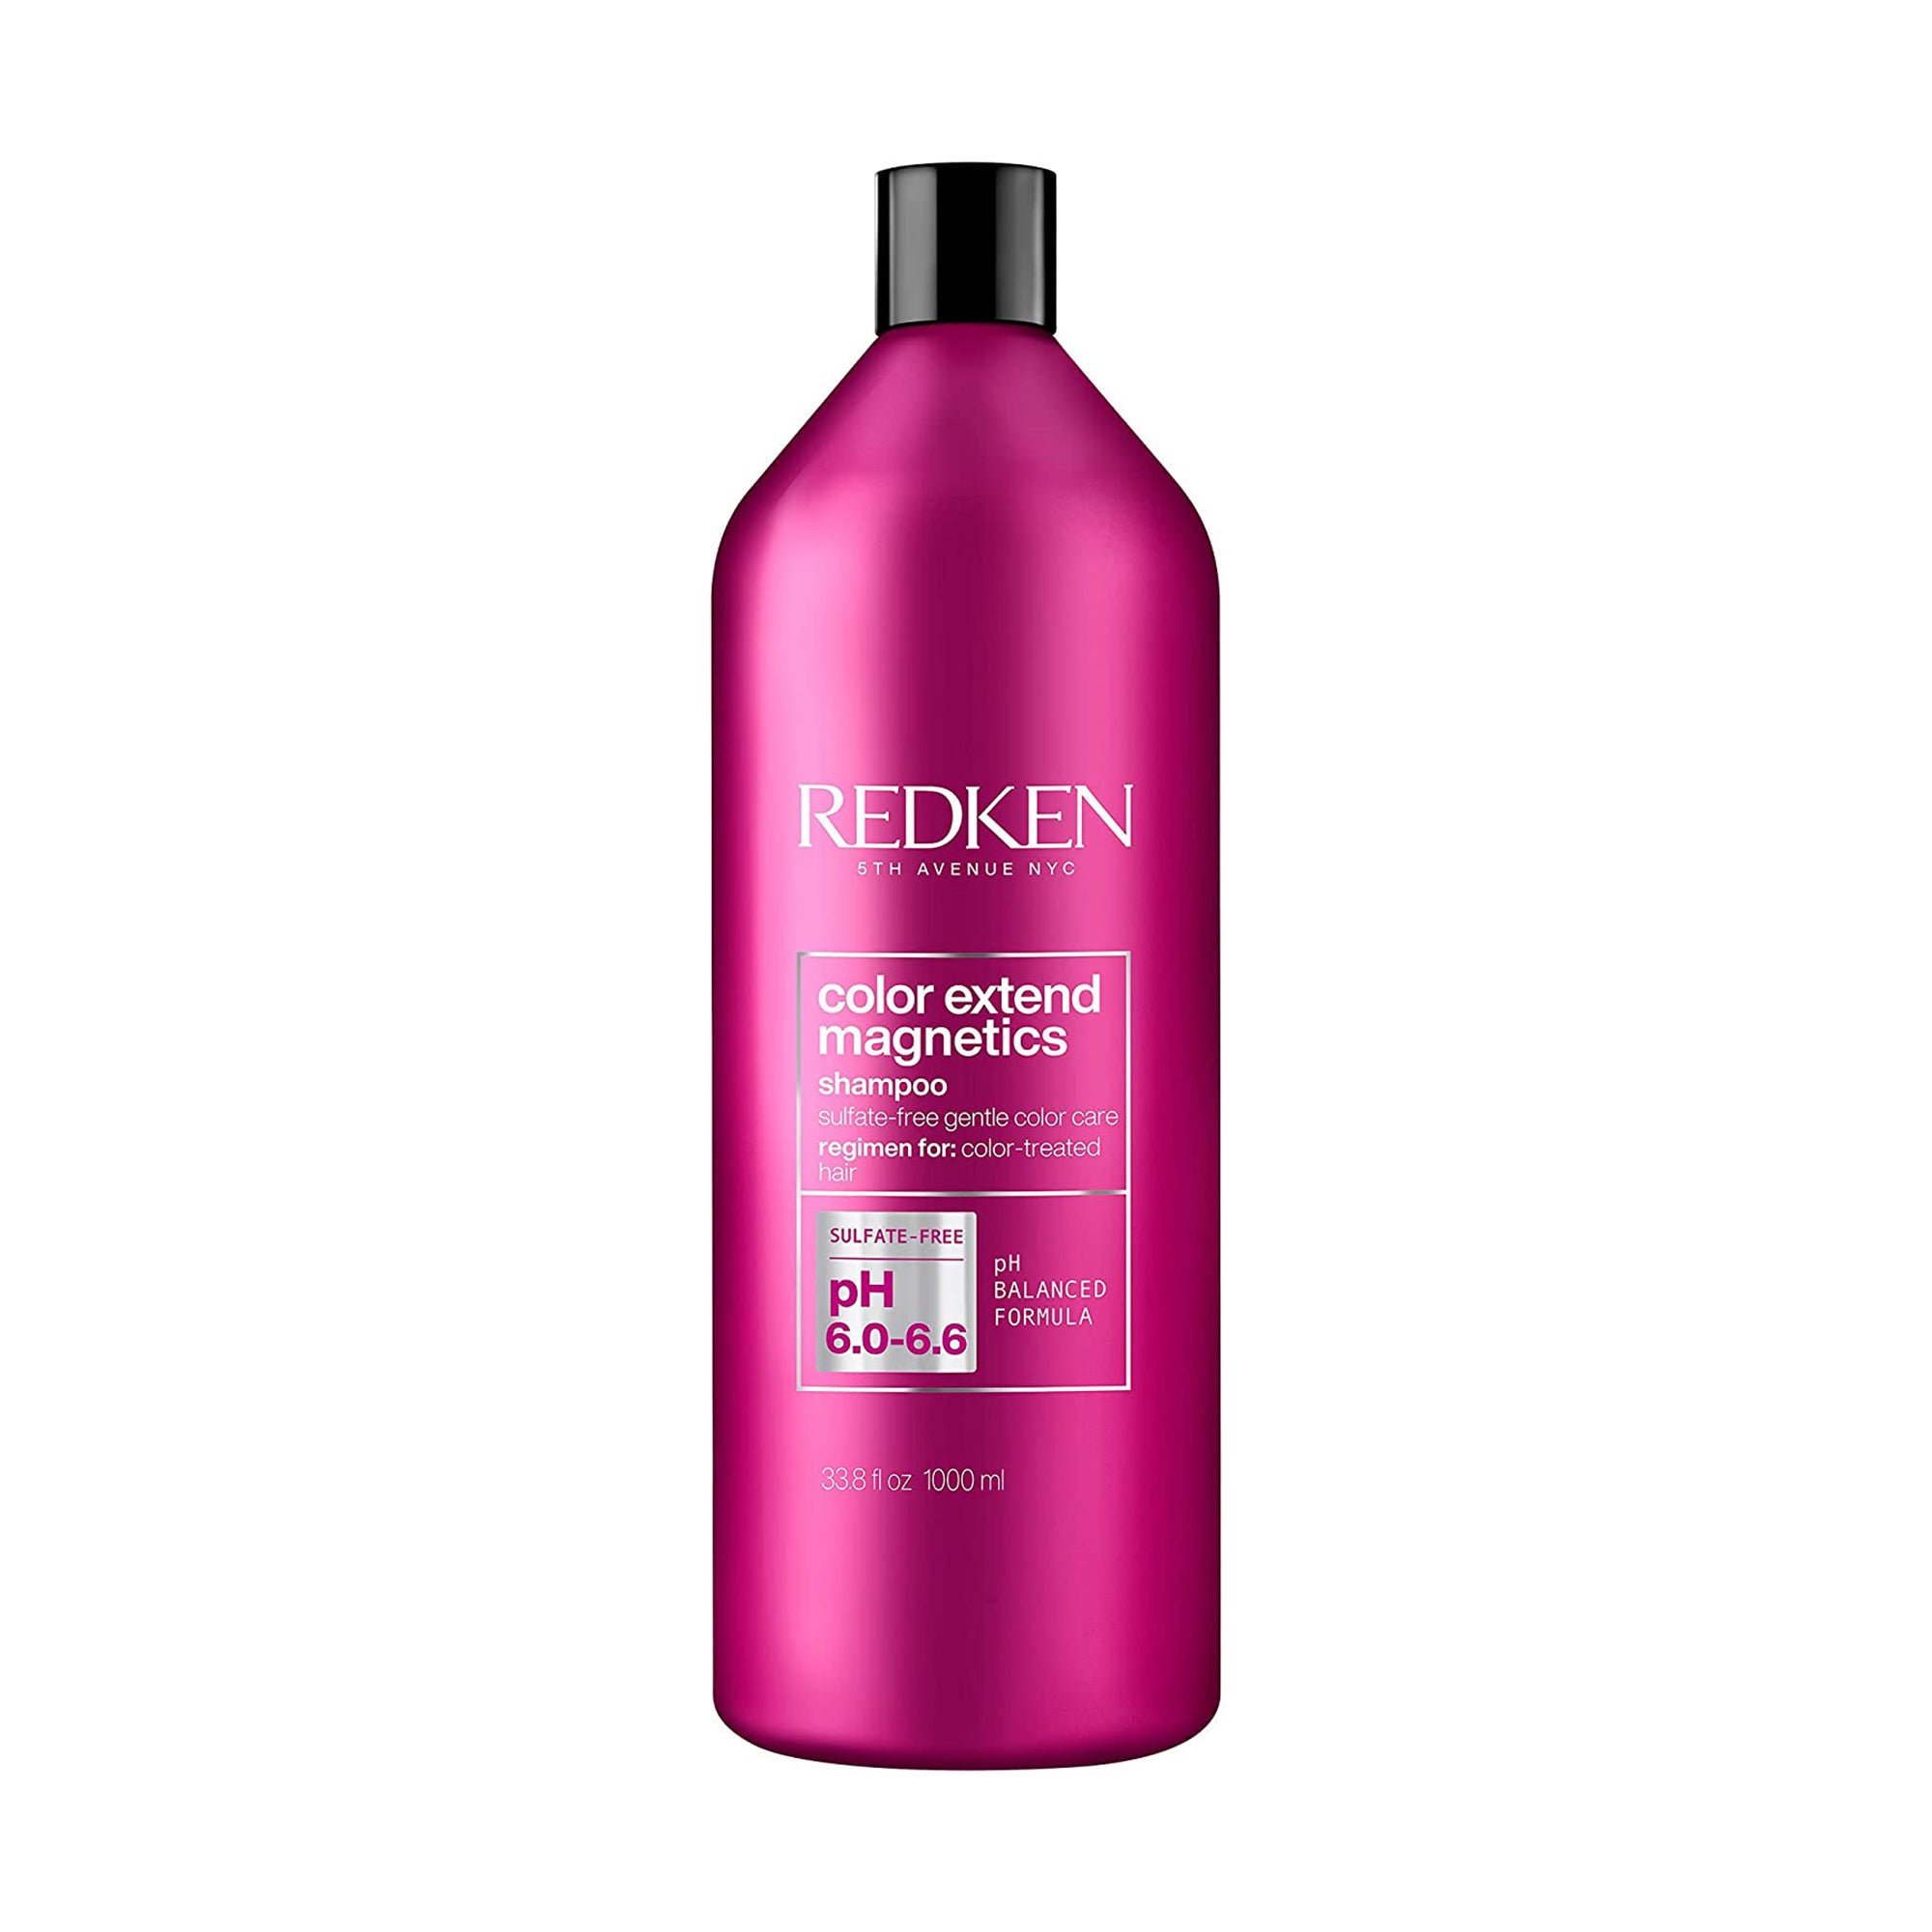 Redken Color Extend Magnetics Shampoo and Conditioner Liter ($100 Value) / 33OZ